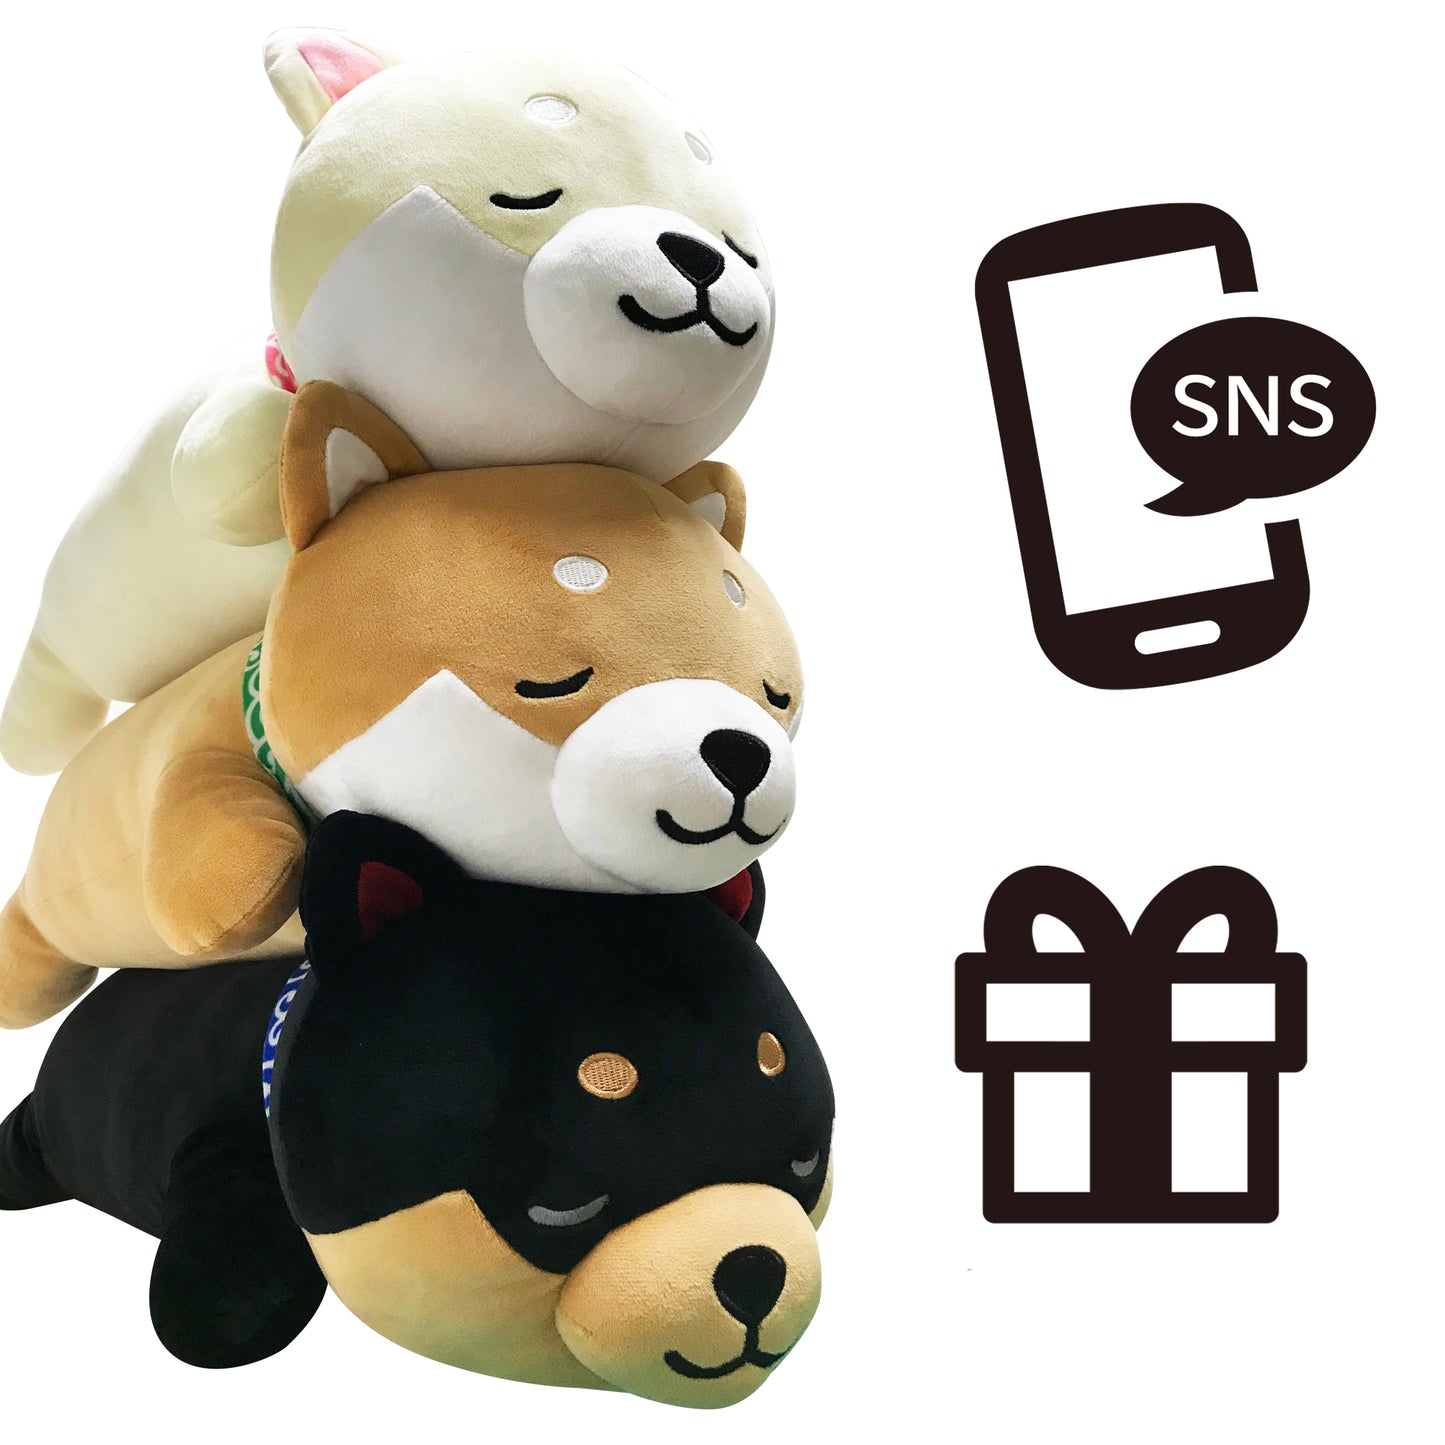 Three stuffed dog Mameshiba pillows and a pictogram